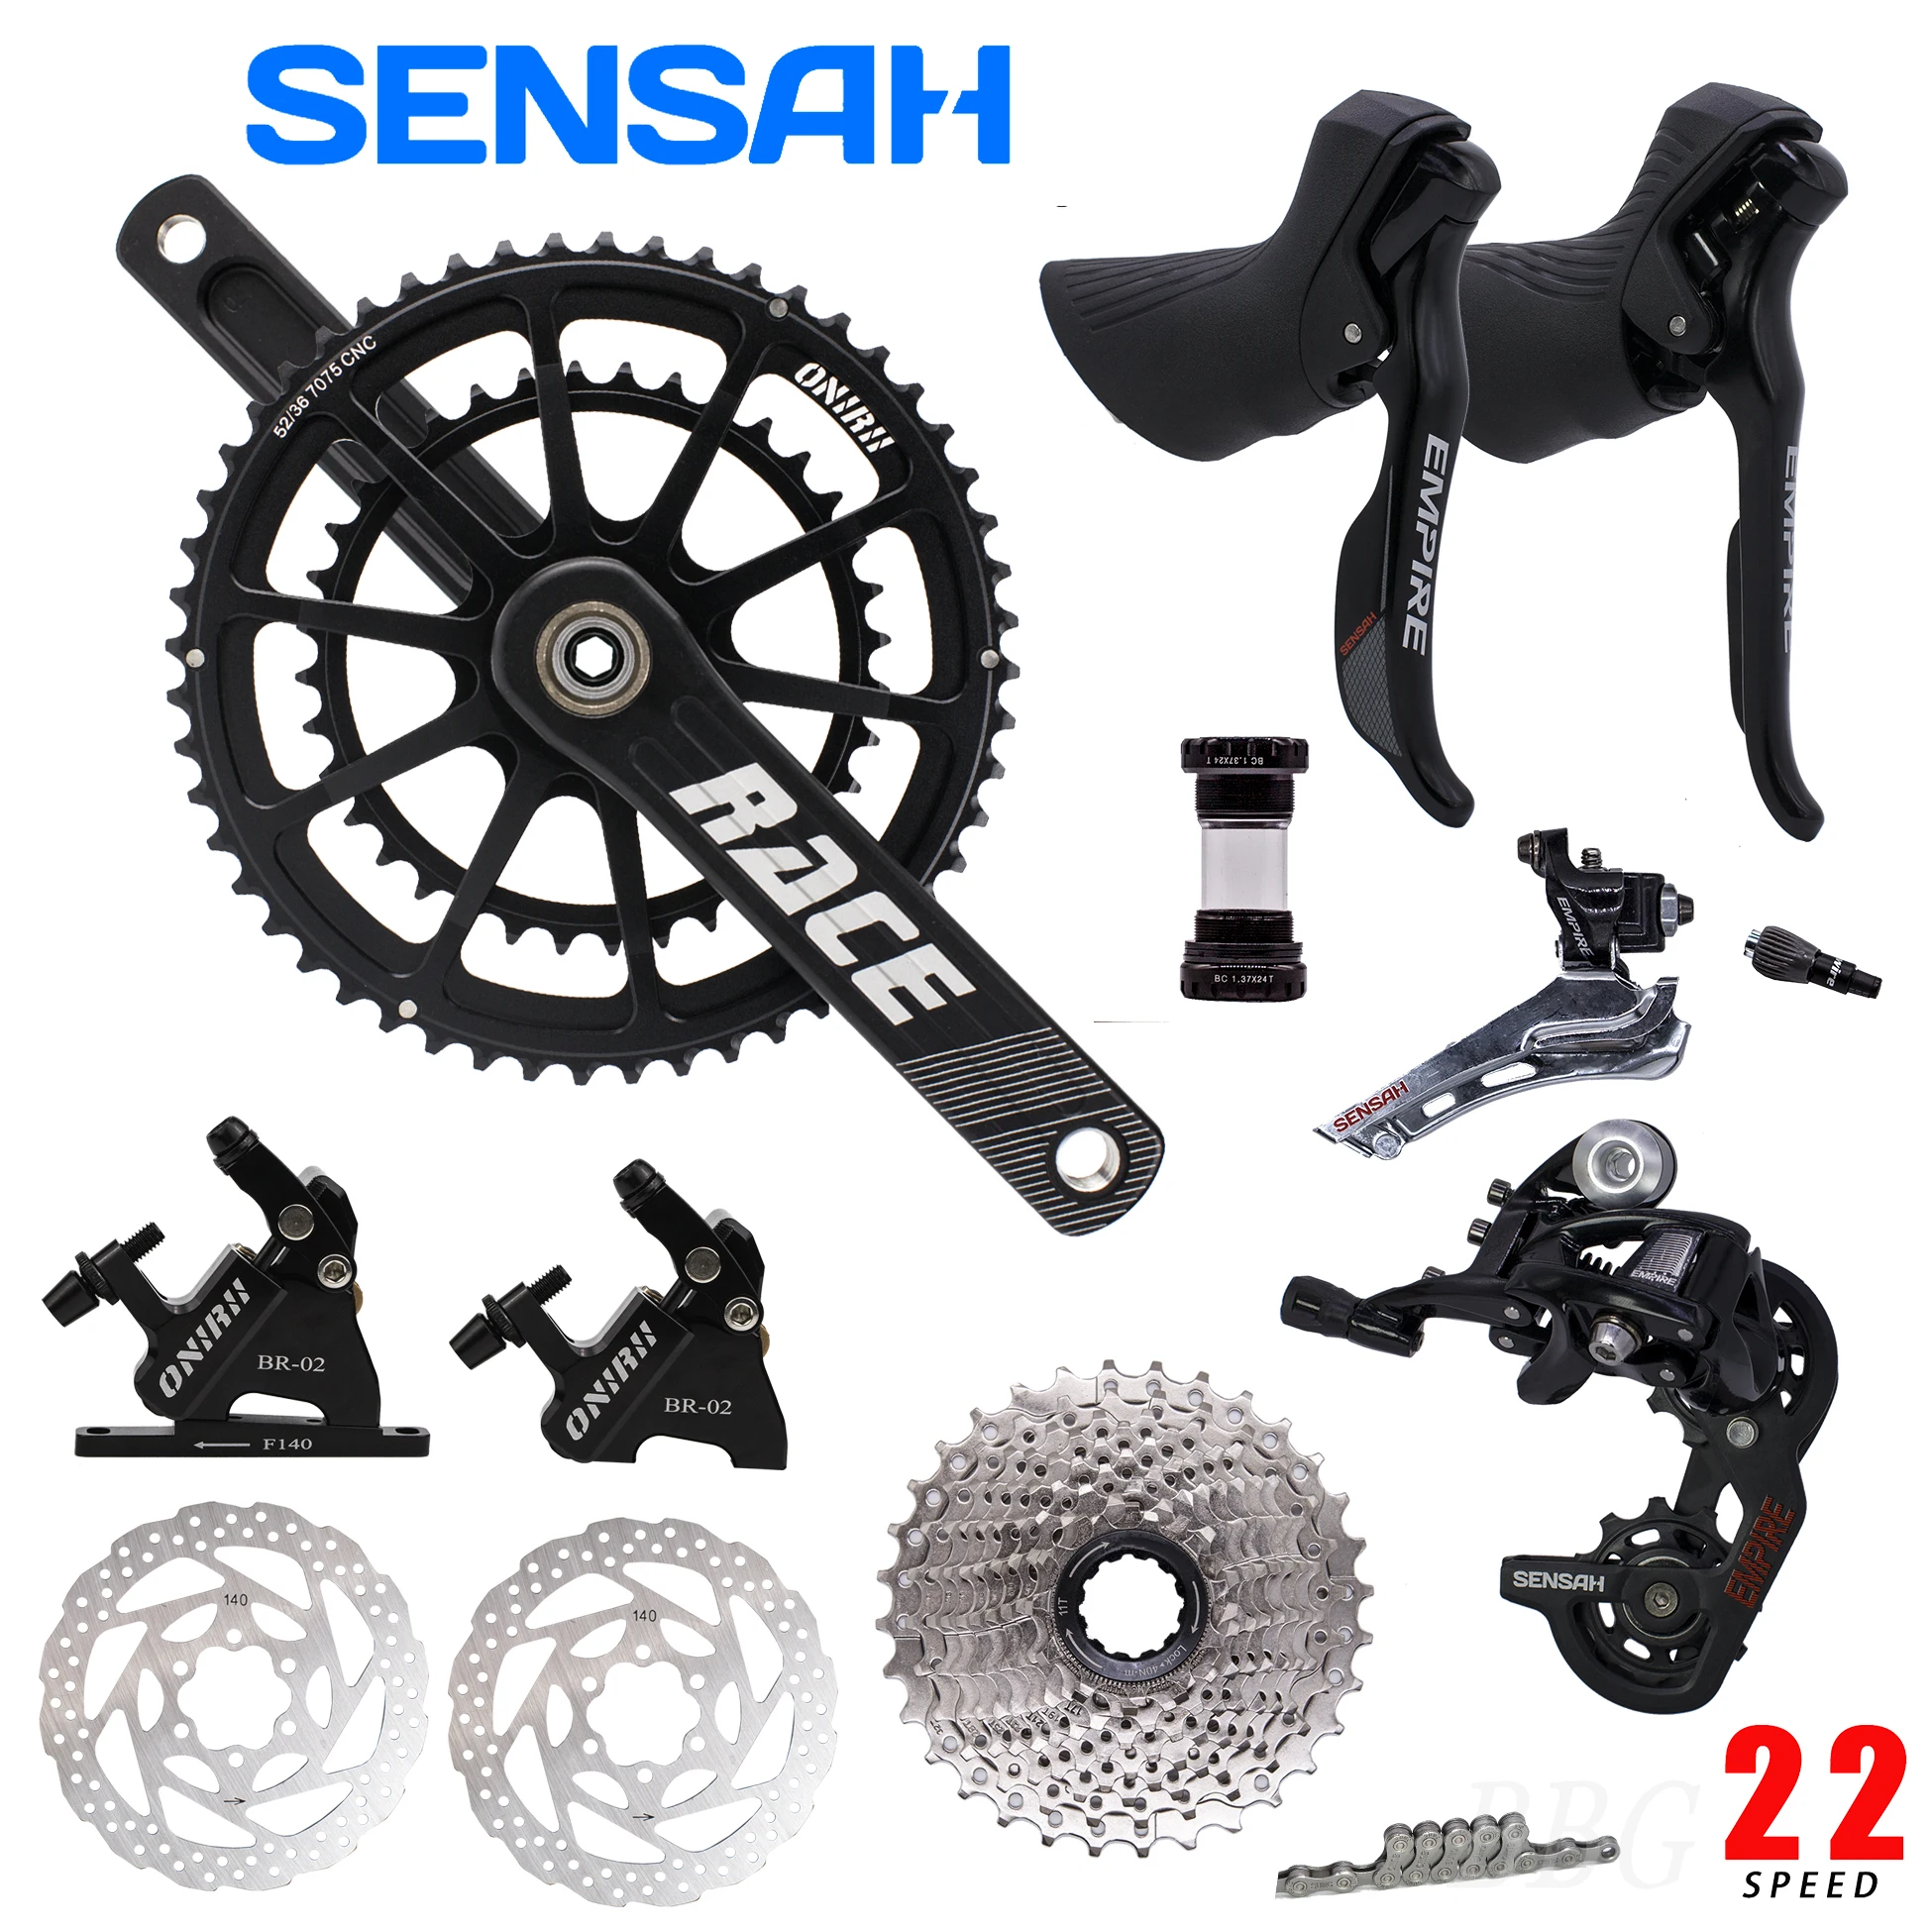 

SENSAH EMPIRE 2x11 Speed 22s Road Groupset Sti Kit UT 105 R7000 Cycling Crank Cassette Shifter Derailleur Hydraulic Disc Brakes